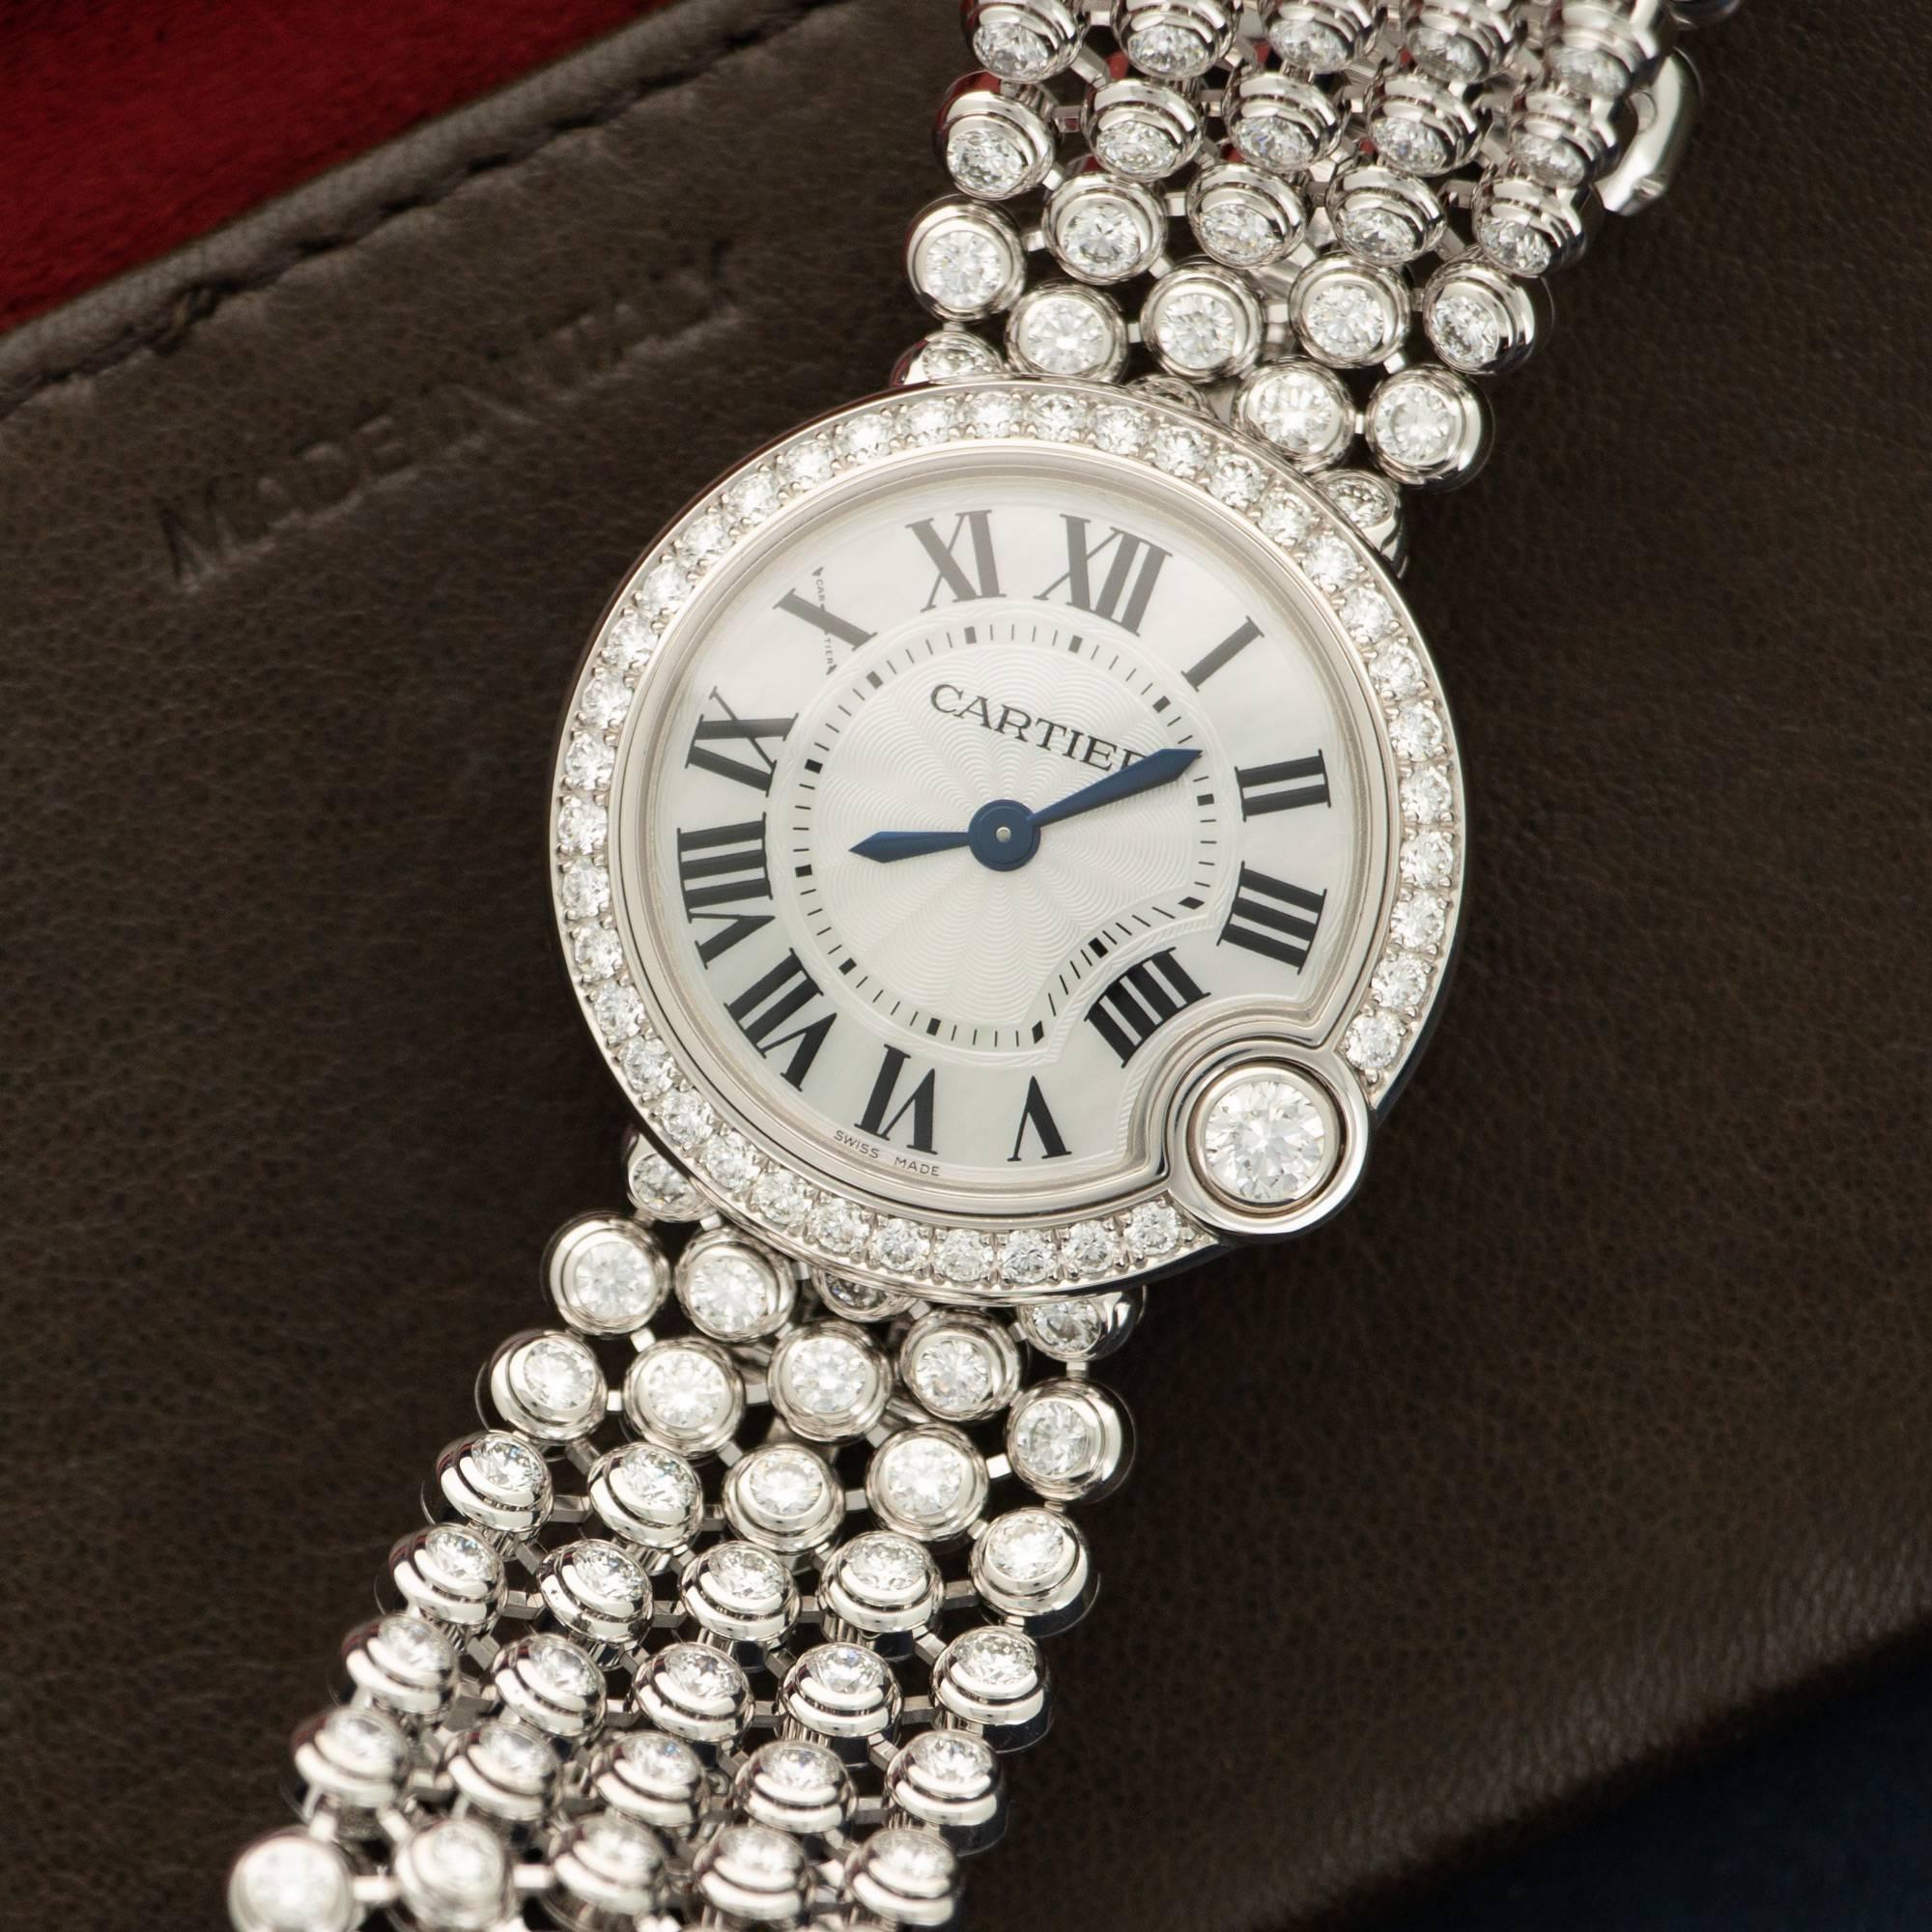 An Extraordinary All Diamond Bracelet Wristwatch, By Cartier. From the 